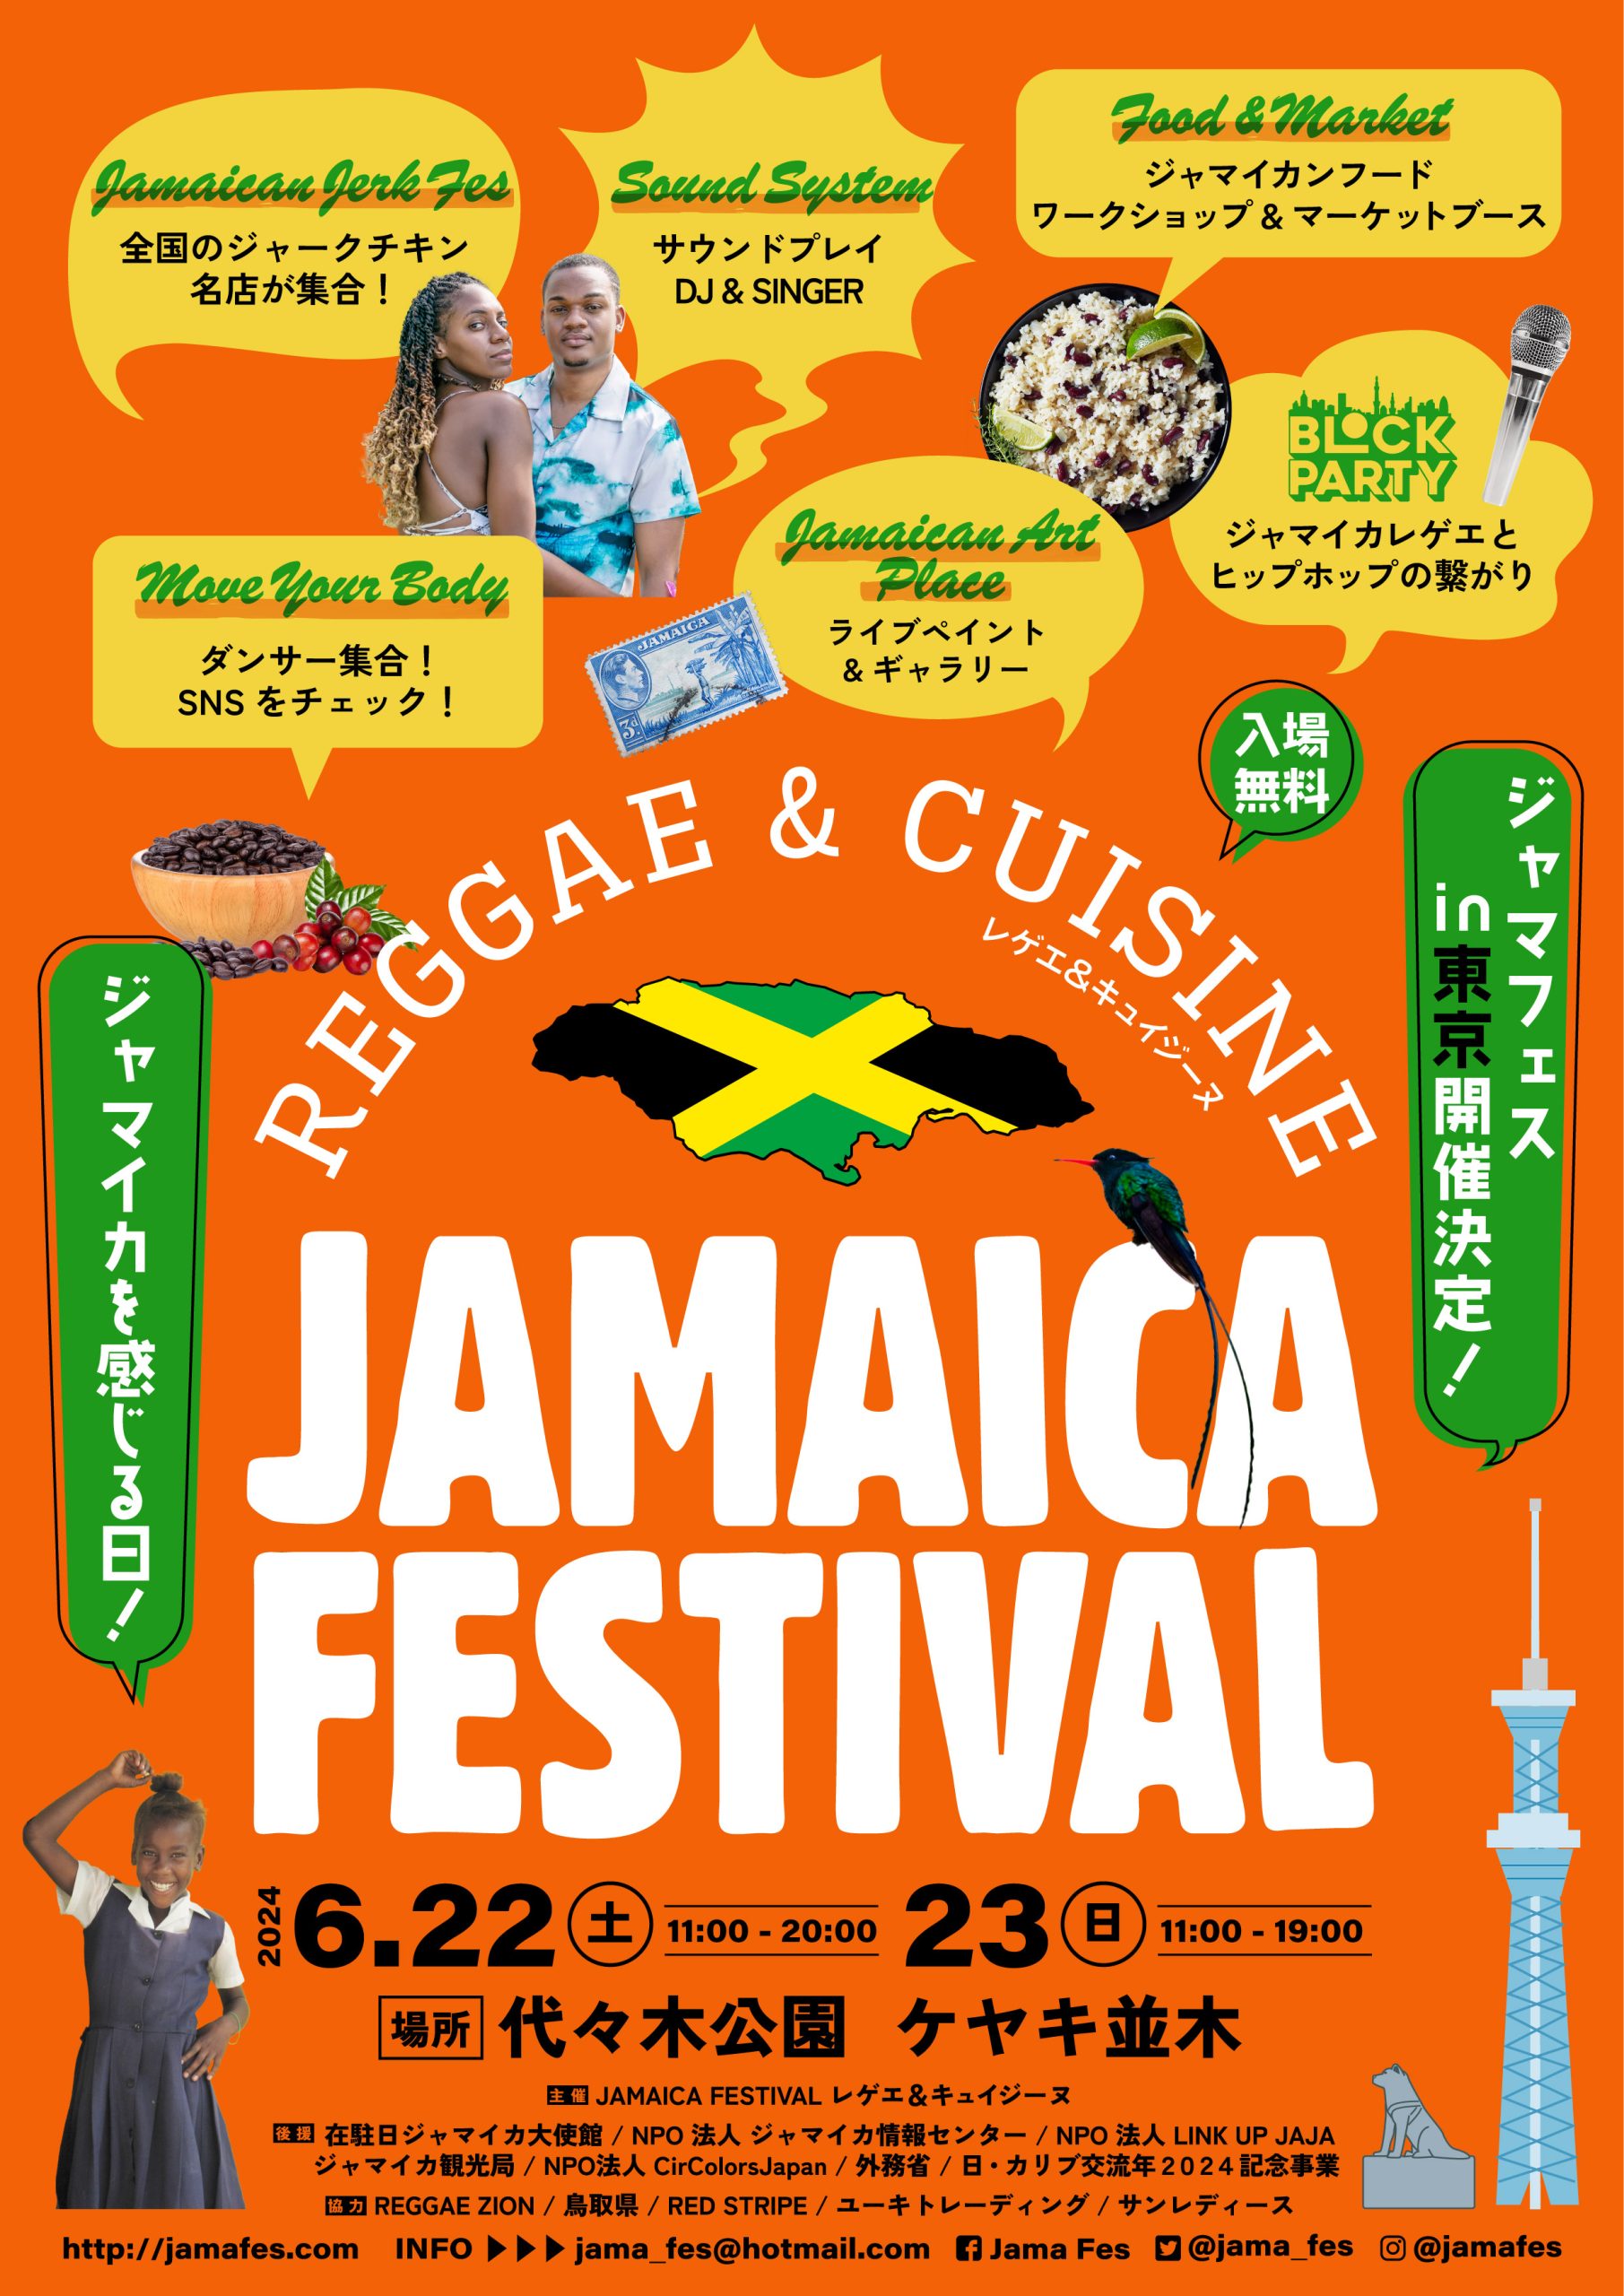 Jamaican Ruff-Cut International | ジャマイカレゲエ情報サイト。ラスタグッズやレゲエ の商品販売をはじめ、ニュース記事やイベントギャラリーなど掲載。